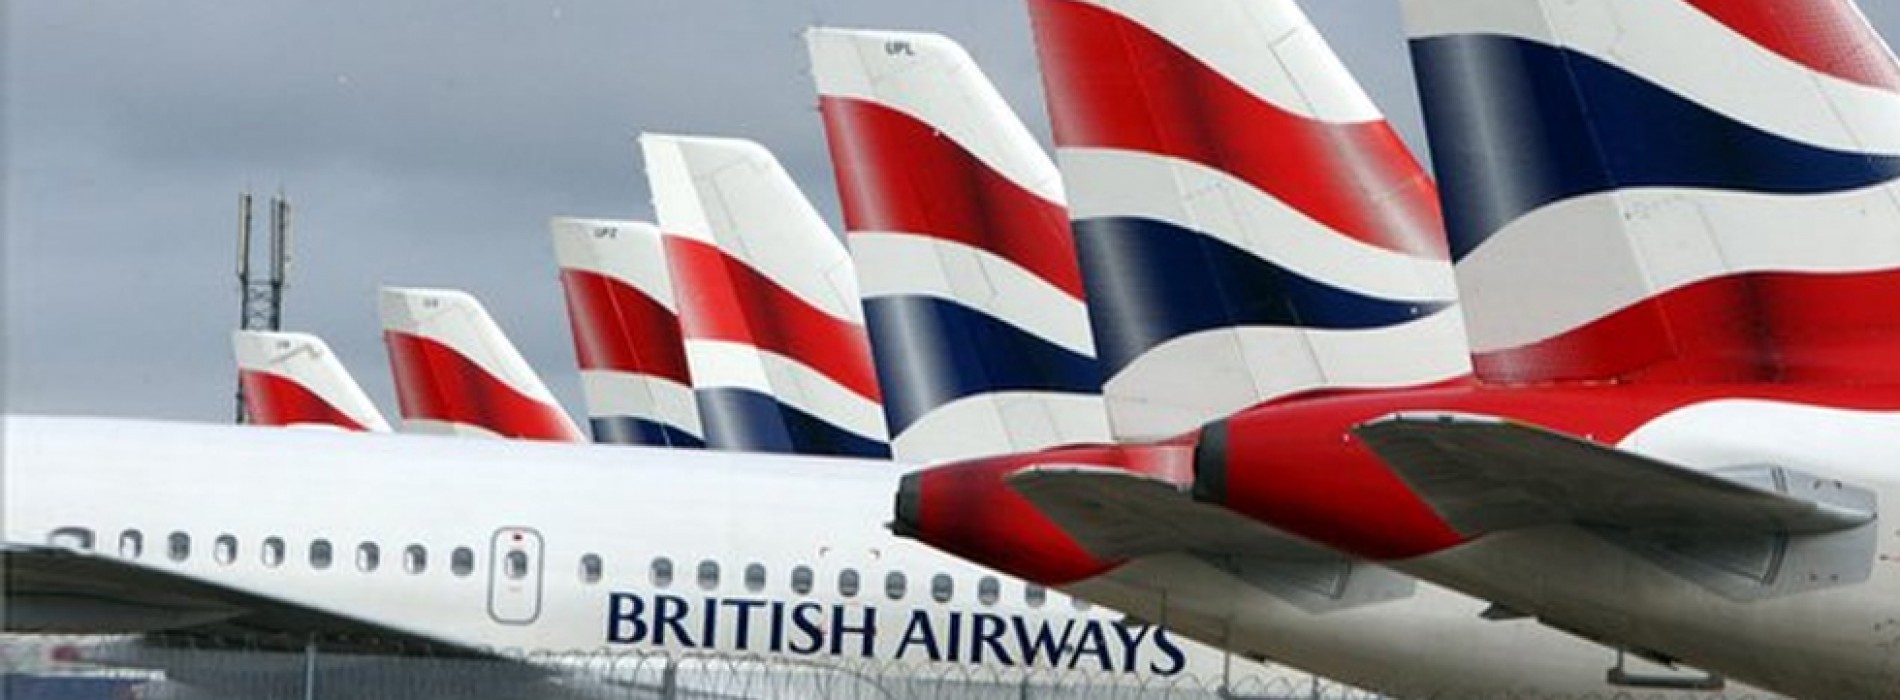 British Airways cabin crew to strike over pay dispute